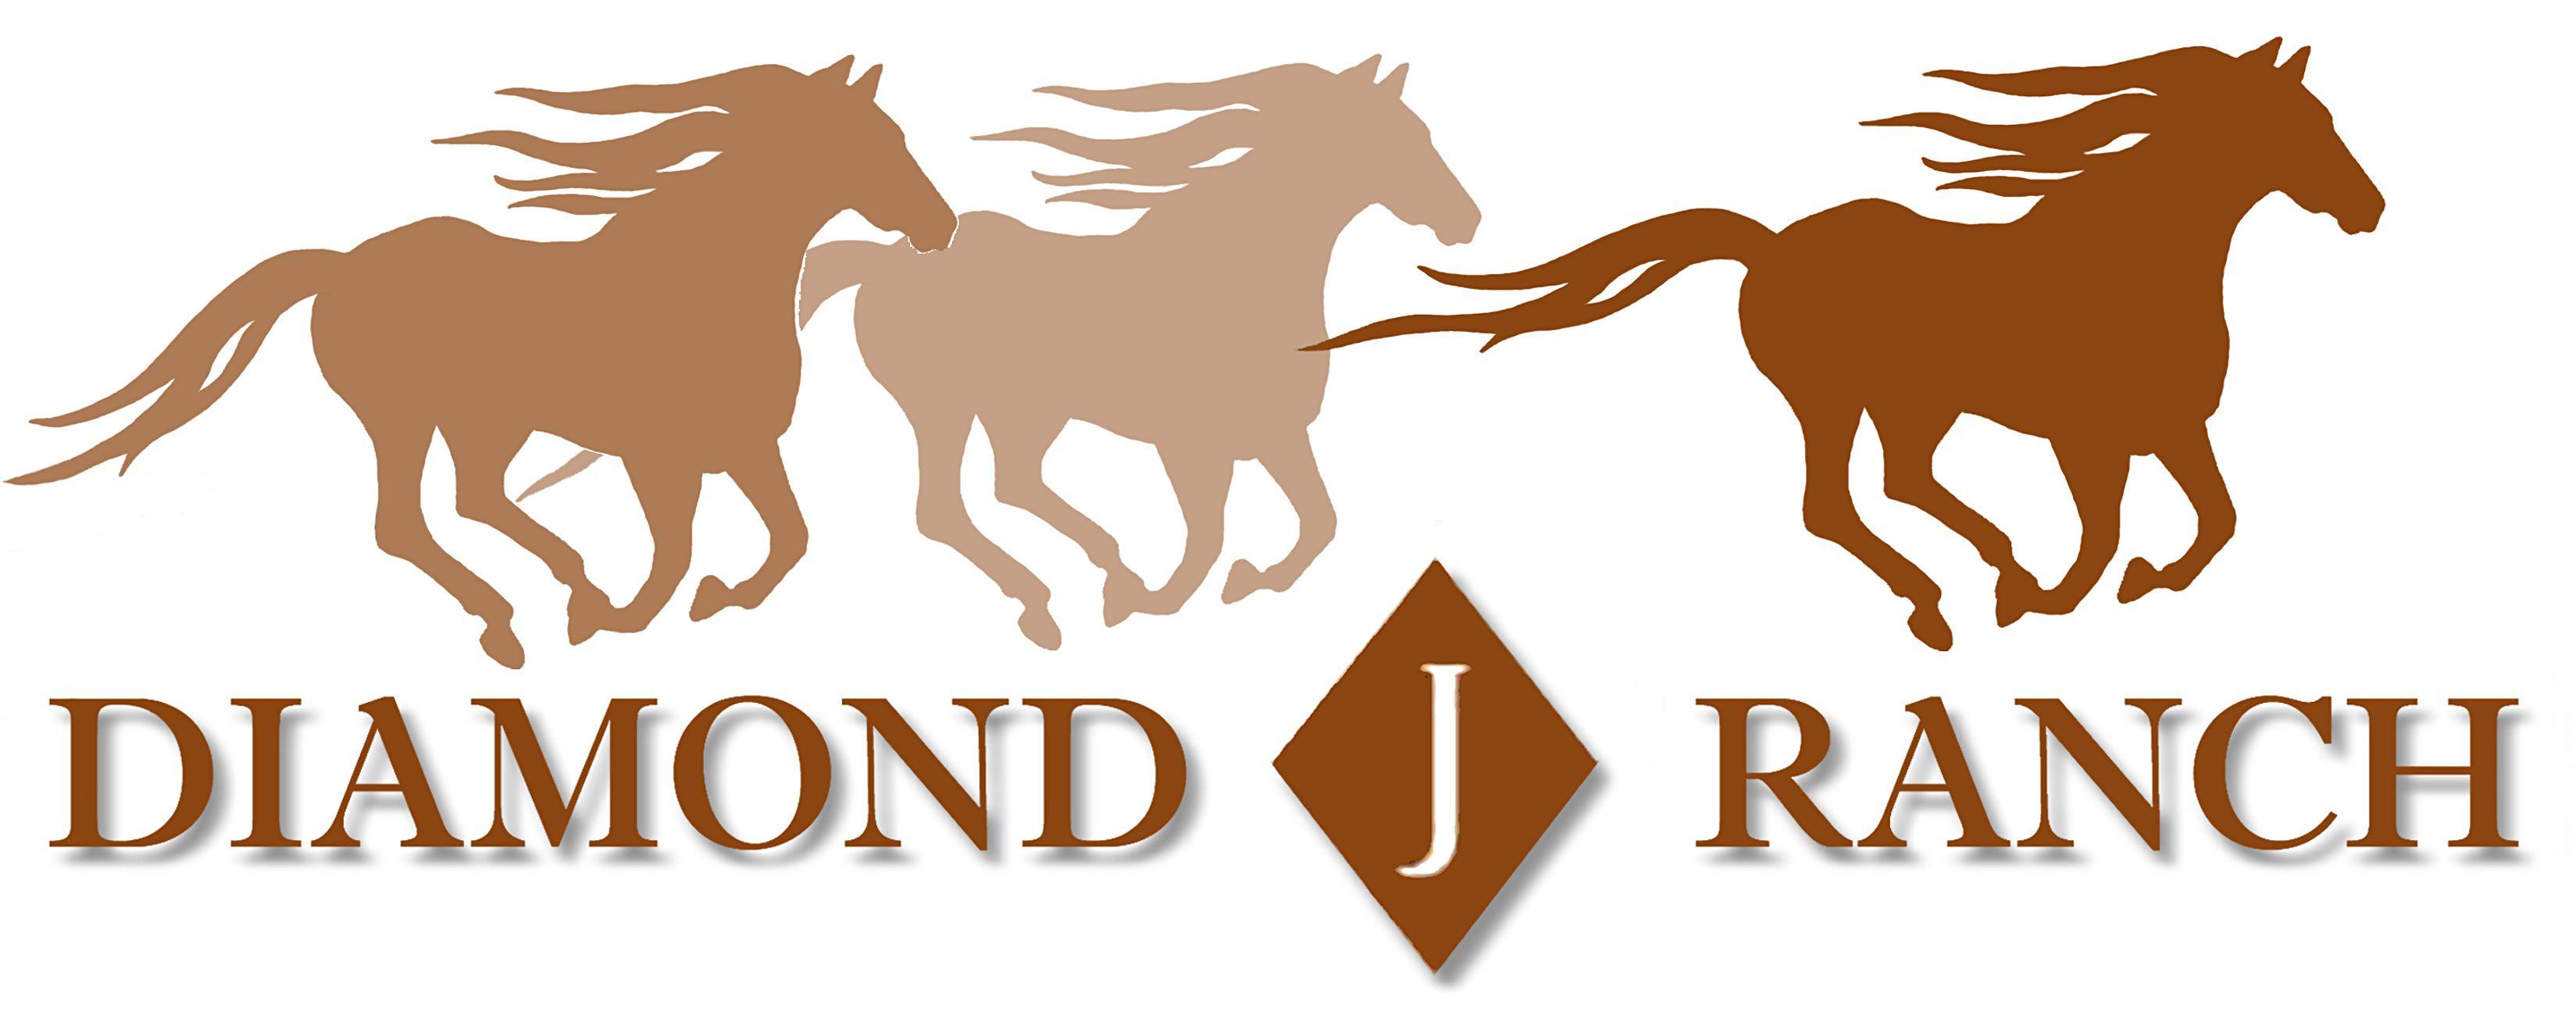 Dimond J Logo - Gallery - Diamond J Ranch